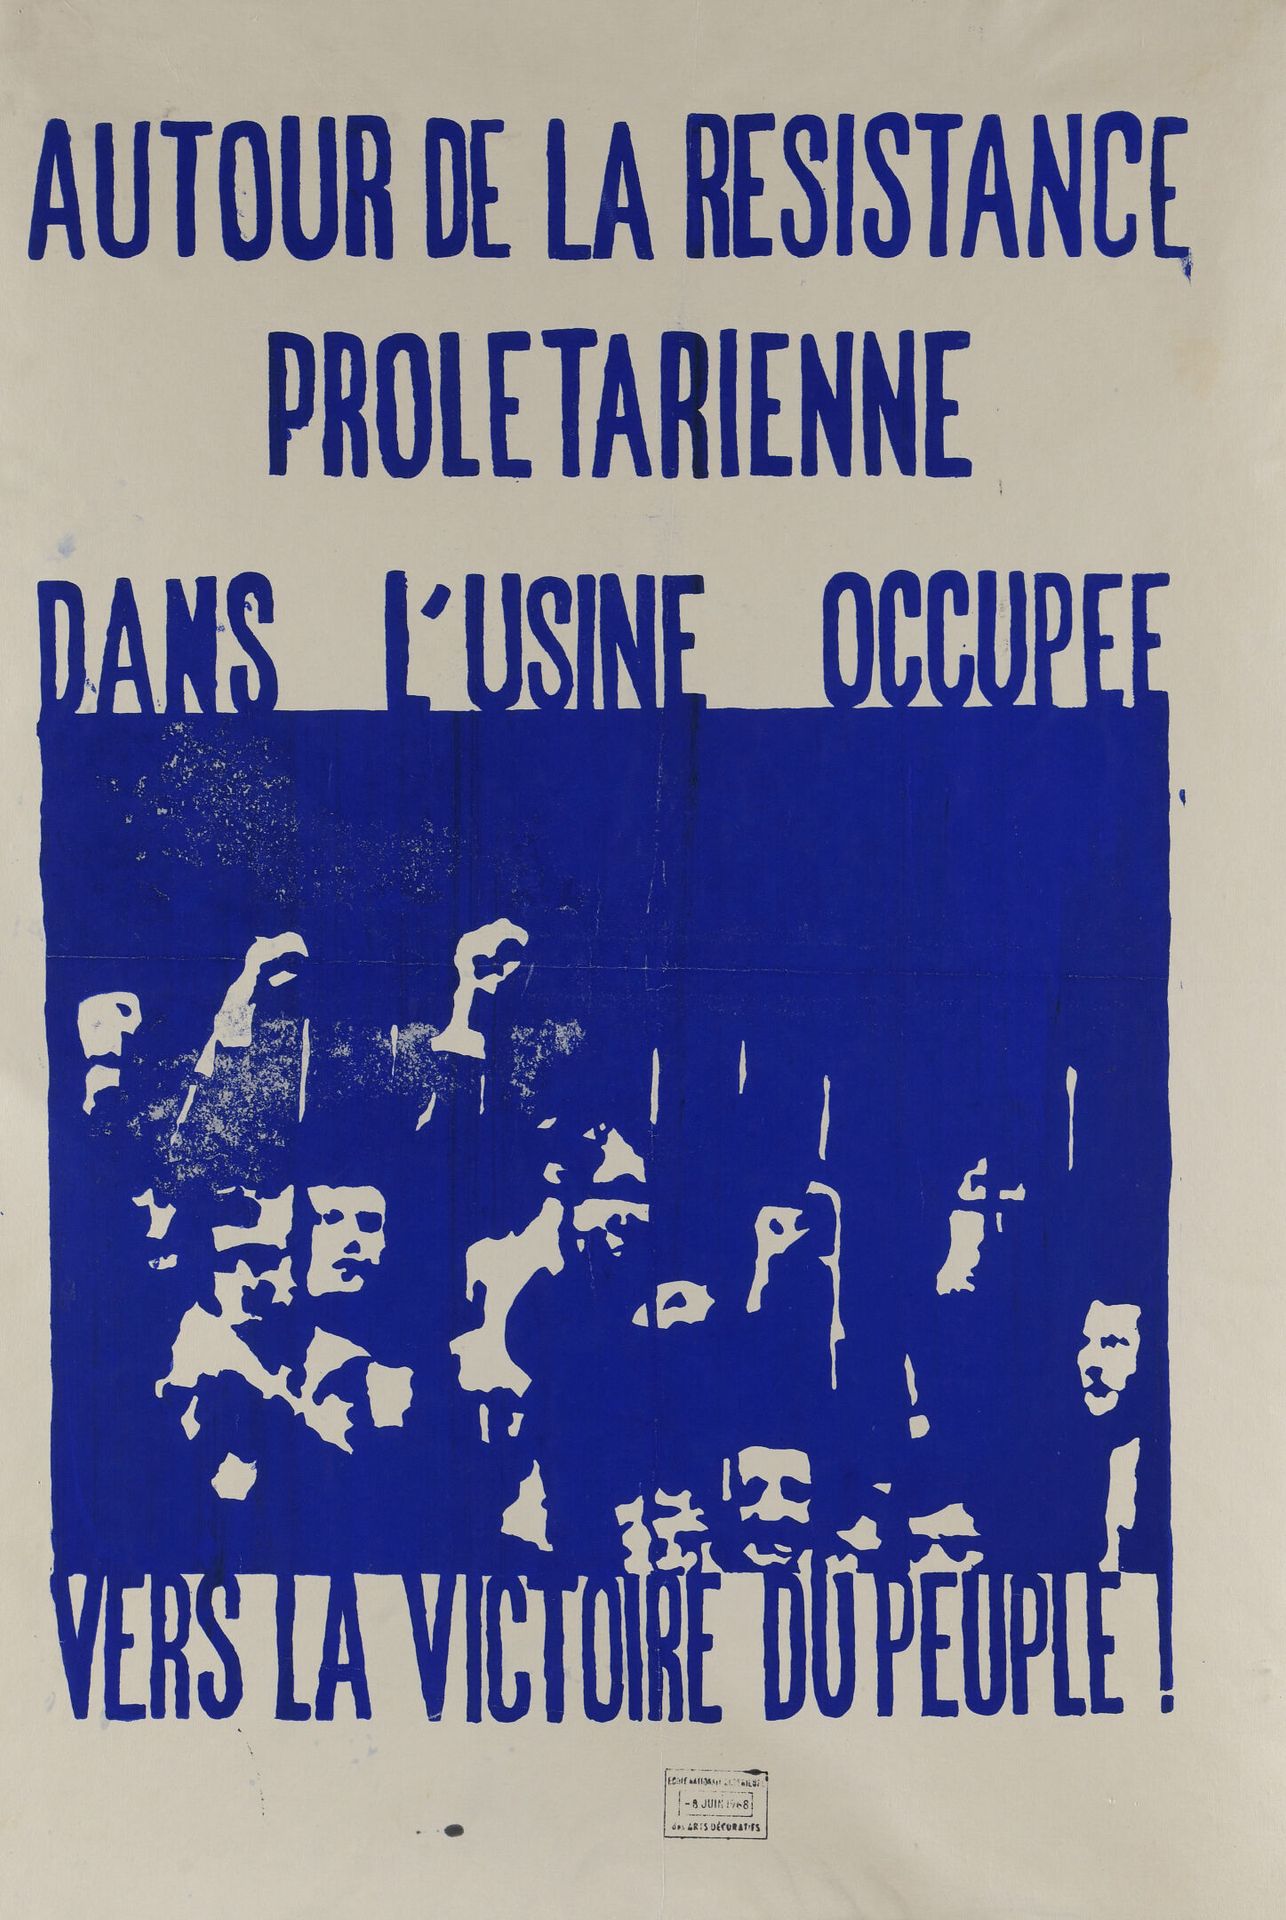 Null [Plakat vom Mai 1968]

École des Arts décoratifs (Schule für dekorative Kün&hellip;